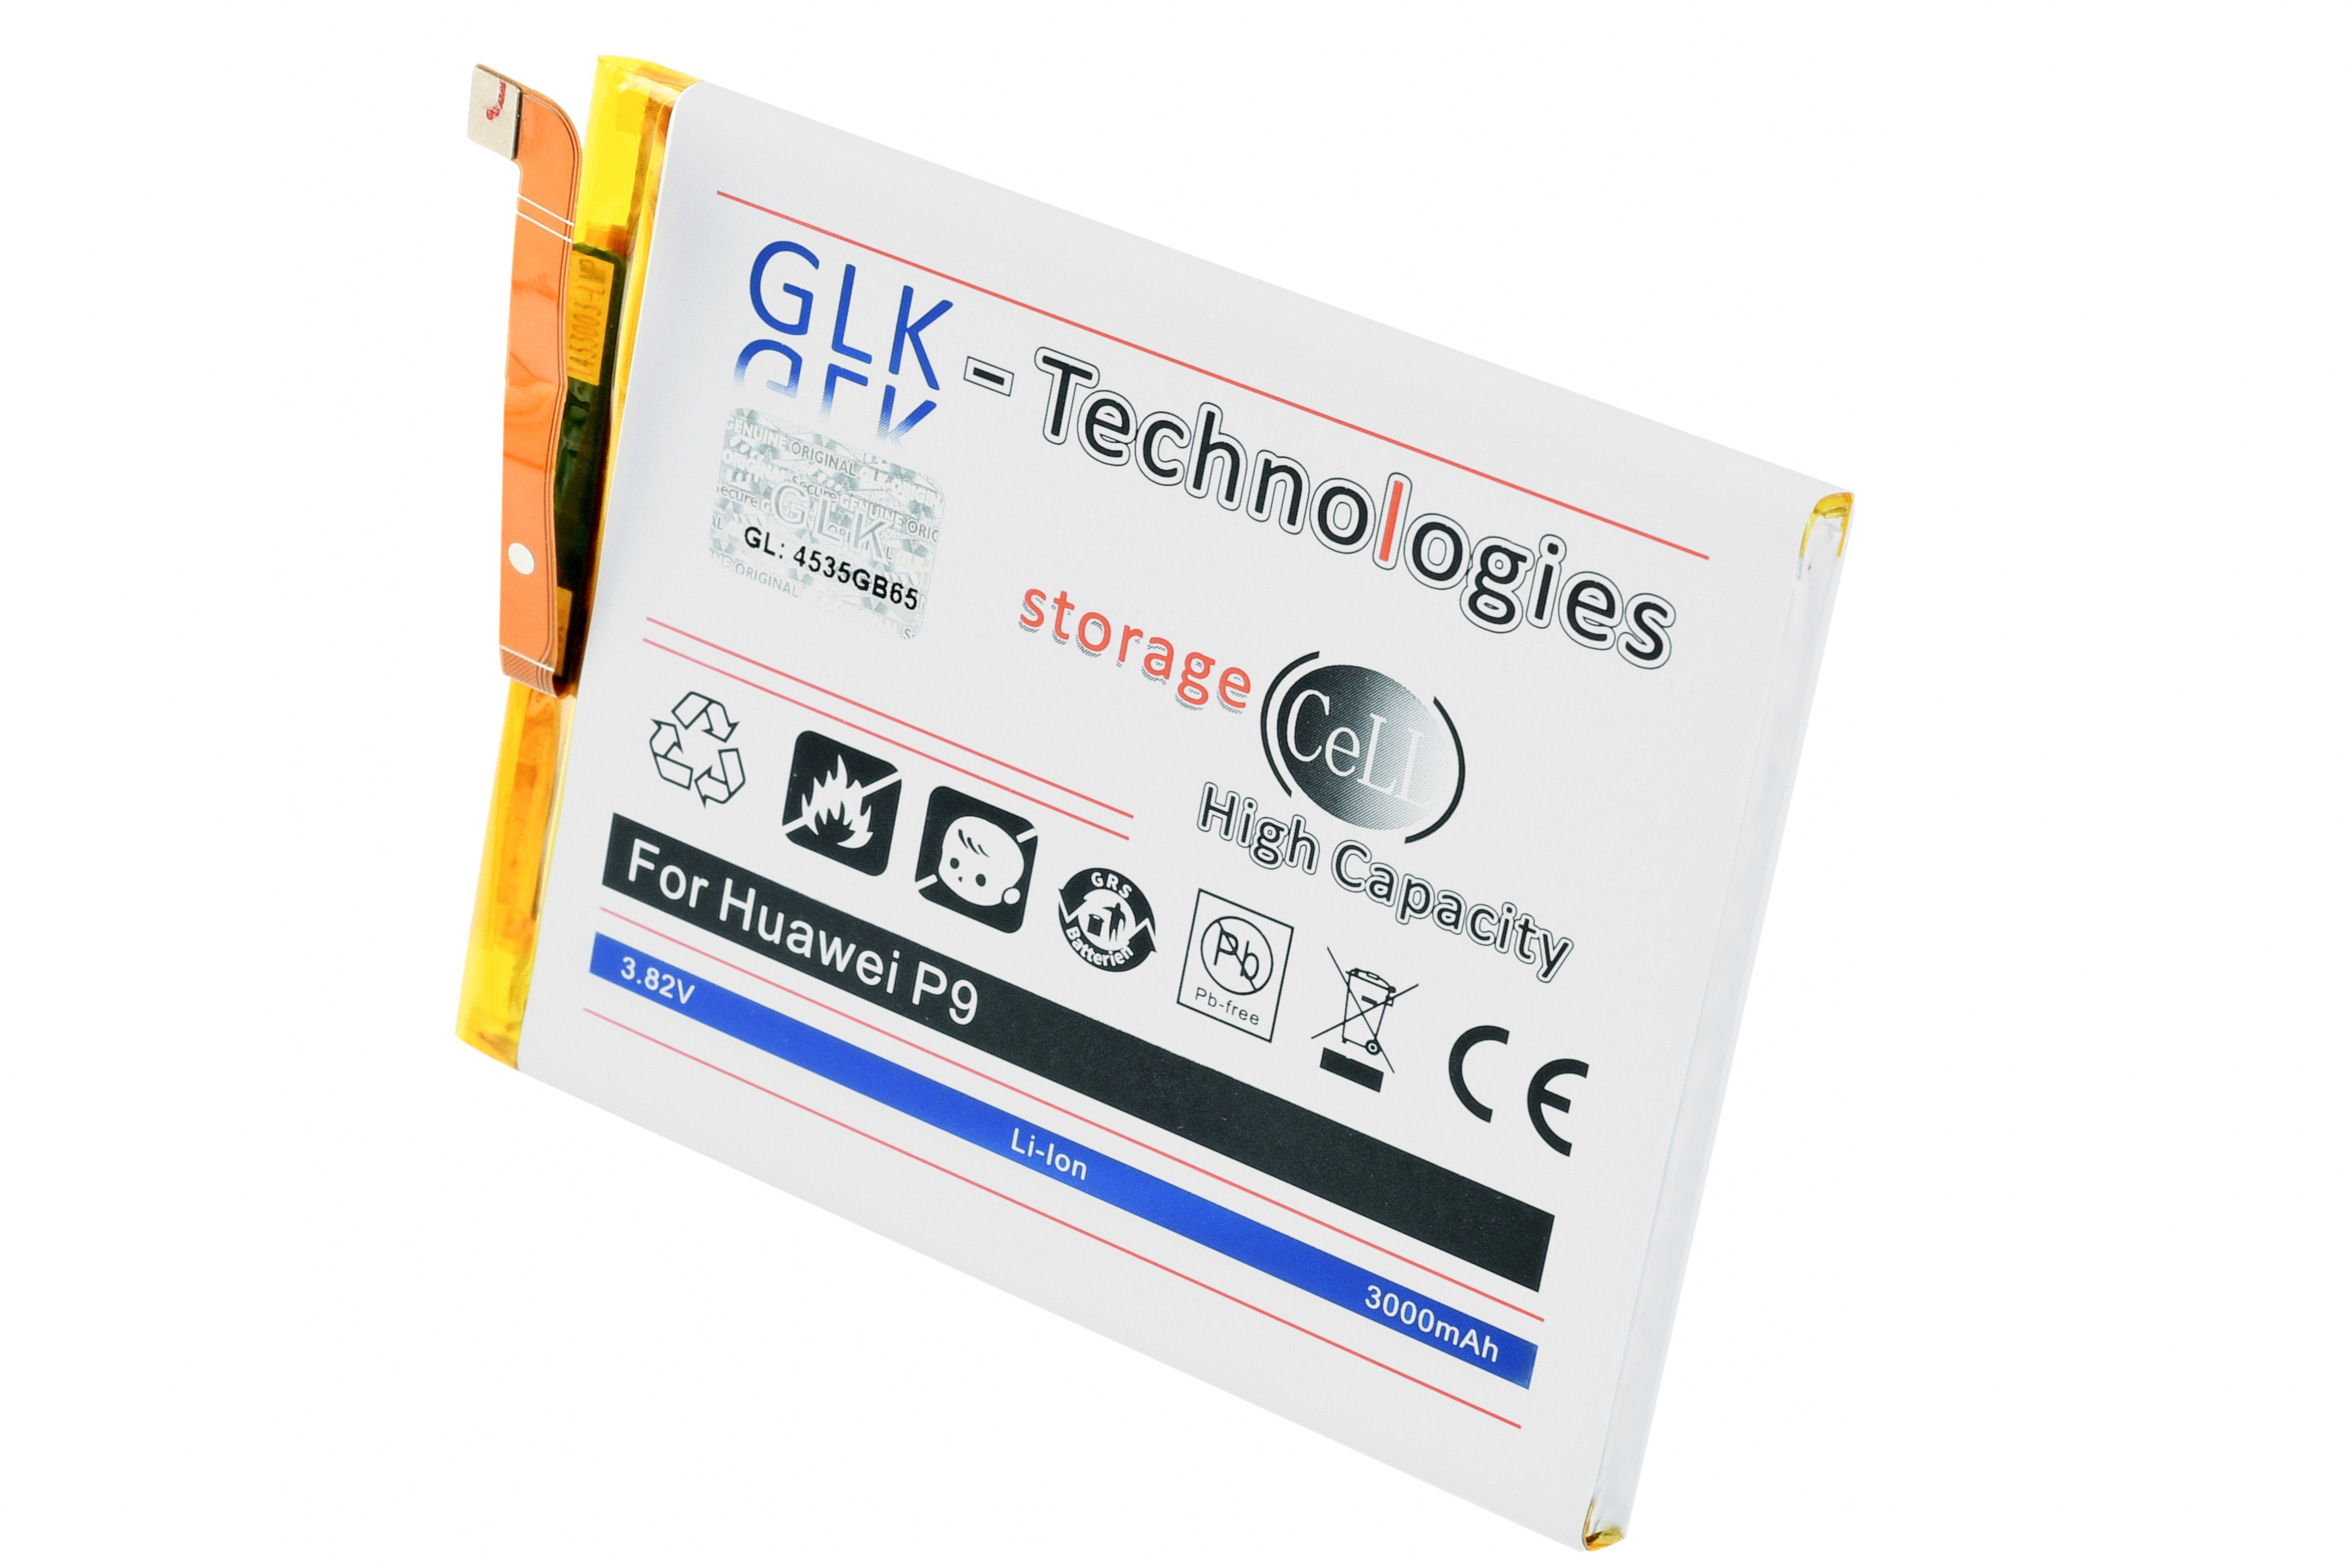 GLK-Technologies High Power Ersatzakku Werkzeug Huawei 3000 mAh Battery, Akku, Set P9 3000 accu, Kit kompatibel Original HB366481ECW, mit inkl. Smartphone-Akku mAh GLK-Technologies